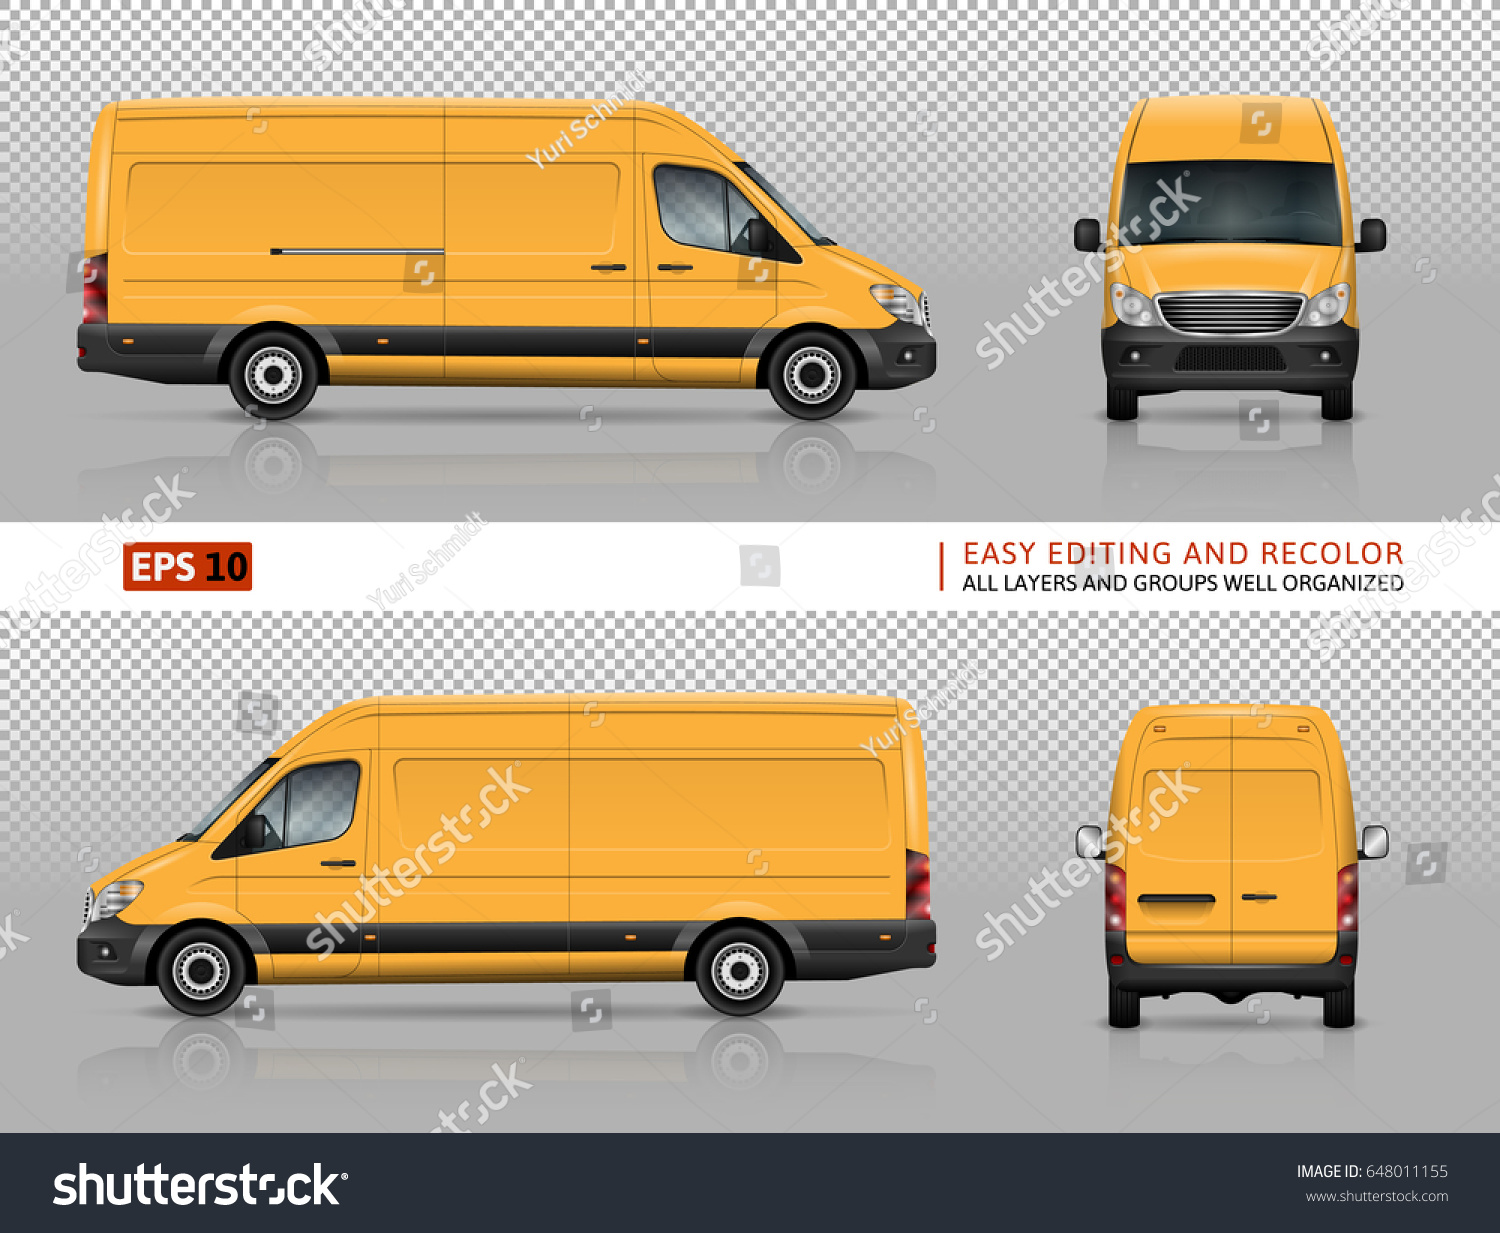 Download Yellow Van Vector Mockup Car Branding Stock Vector Royalty Free 648011155 PSD Mockup Templates